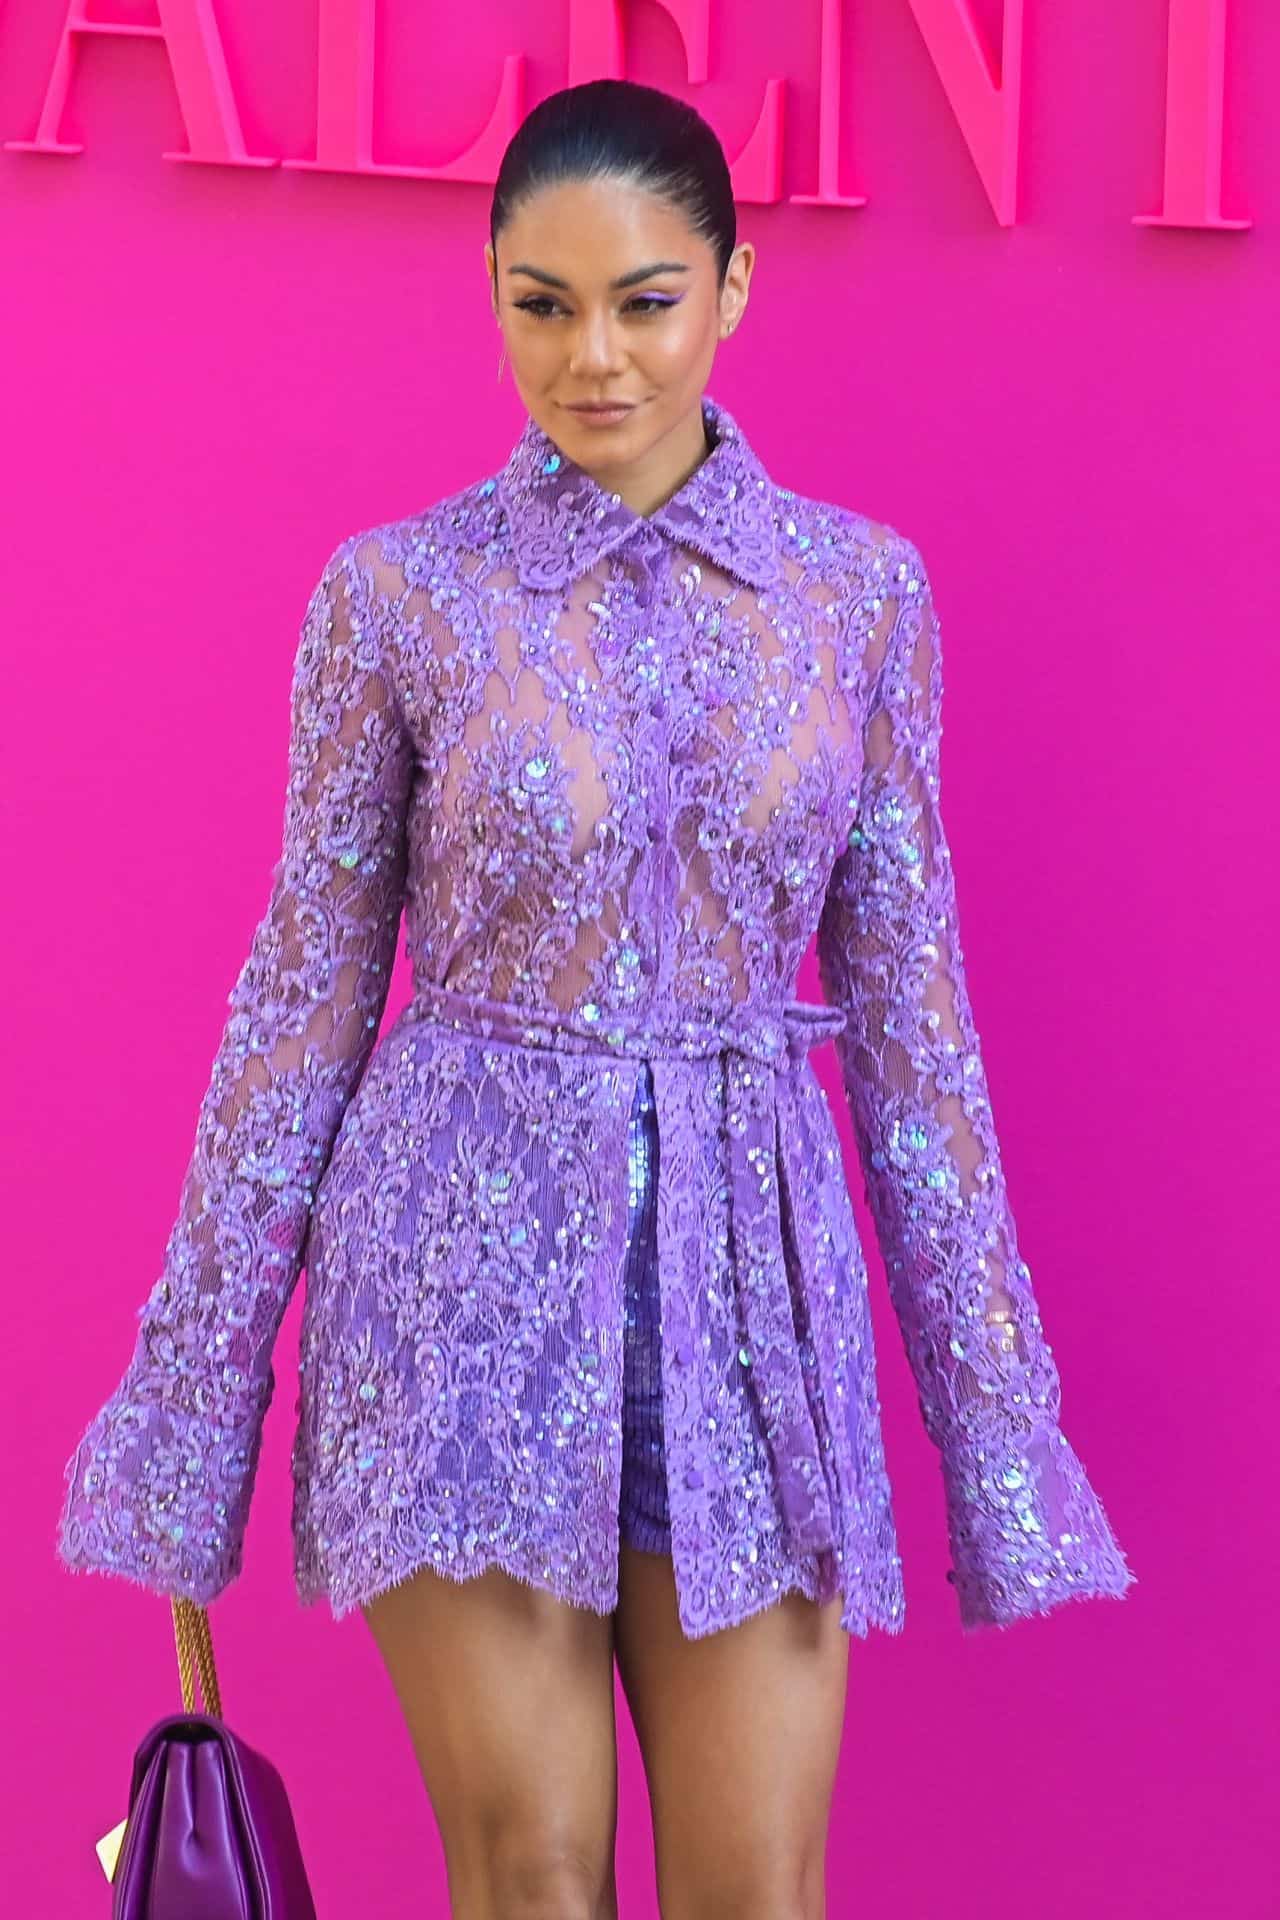 Vanessa Hudgens Turns Up the Heat in Purple Mini Dress at Valentino Show